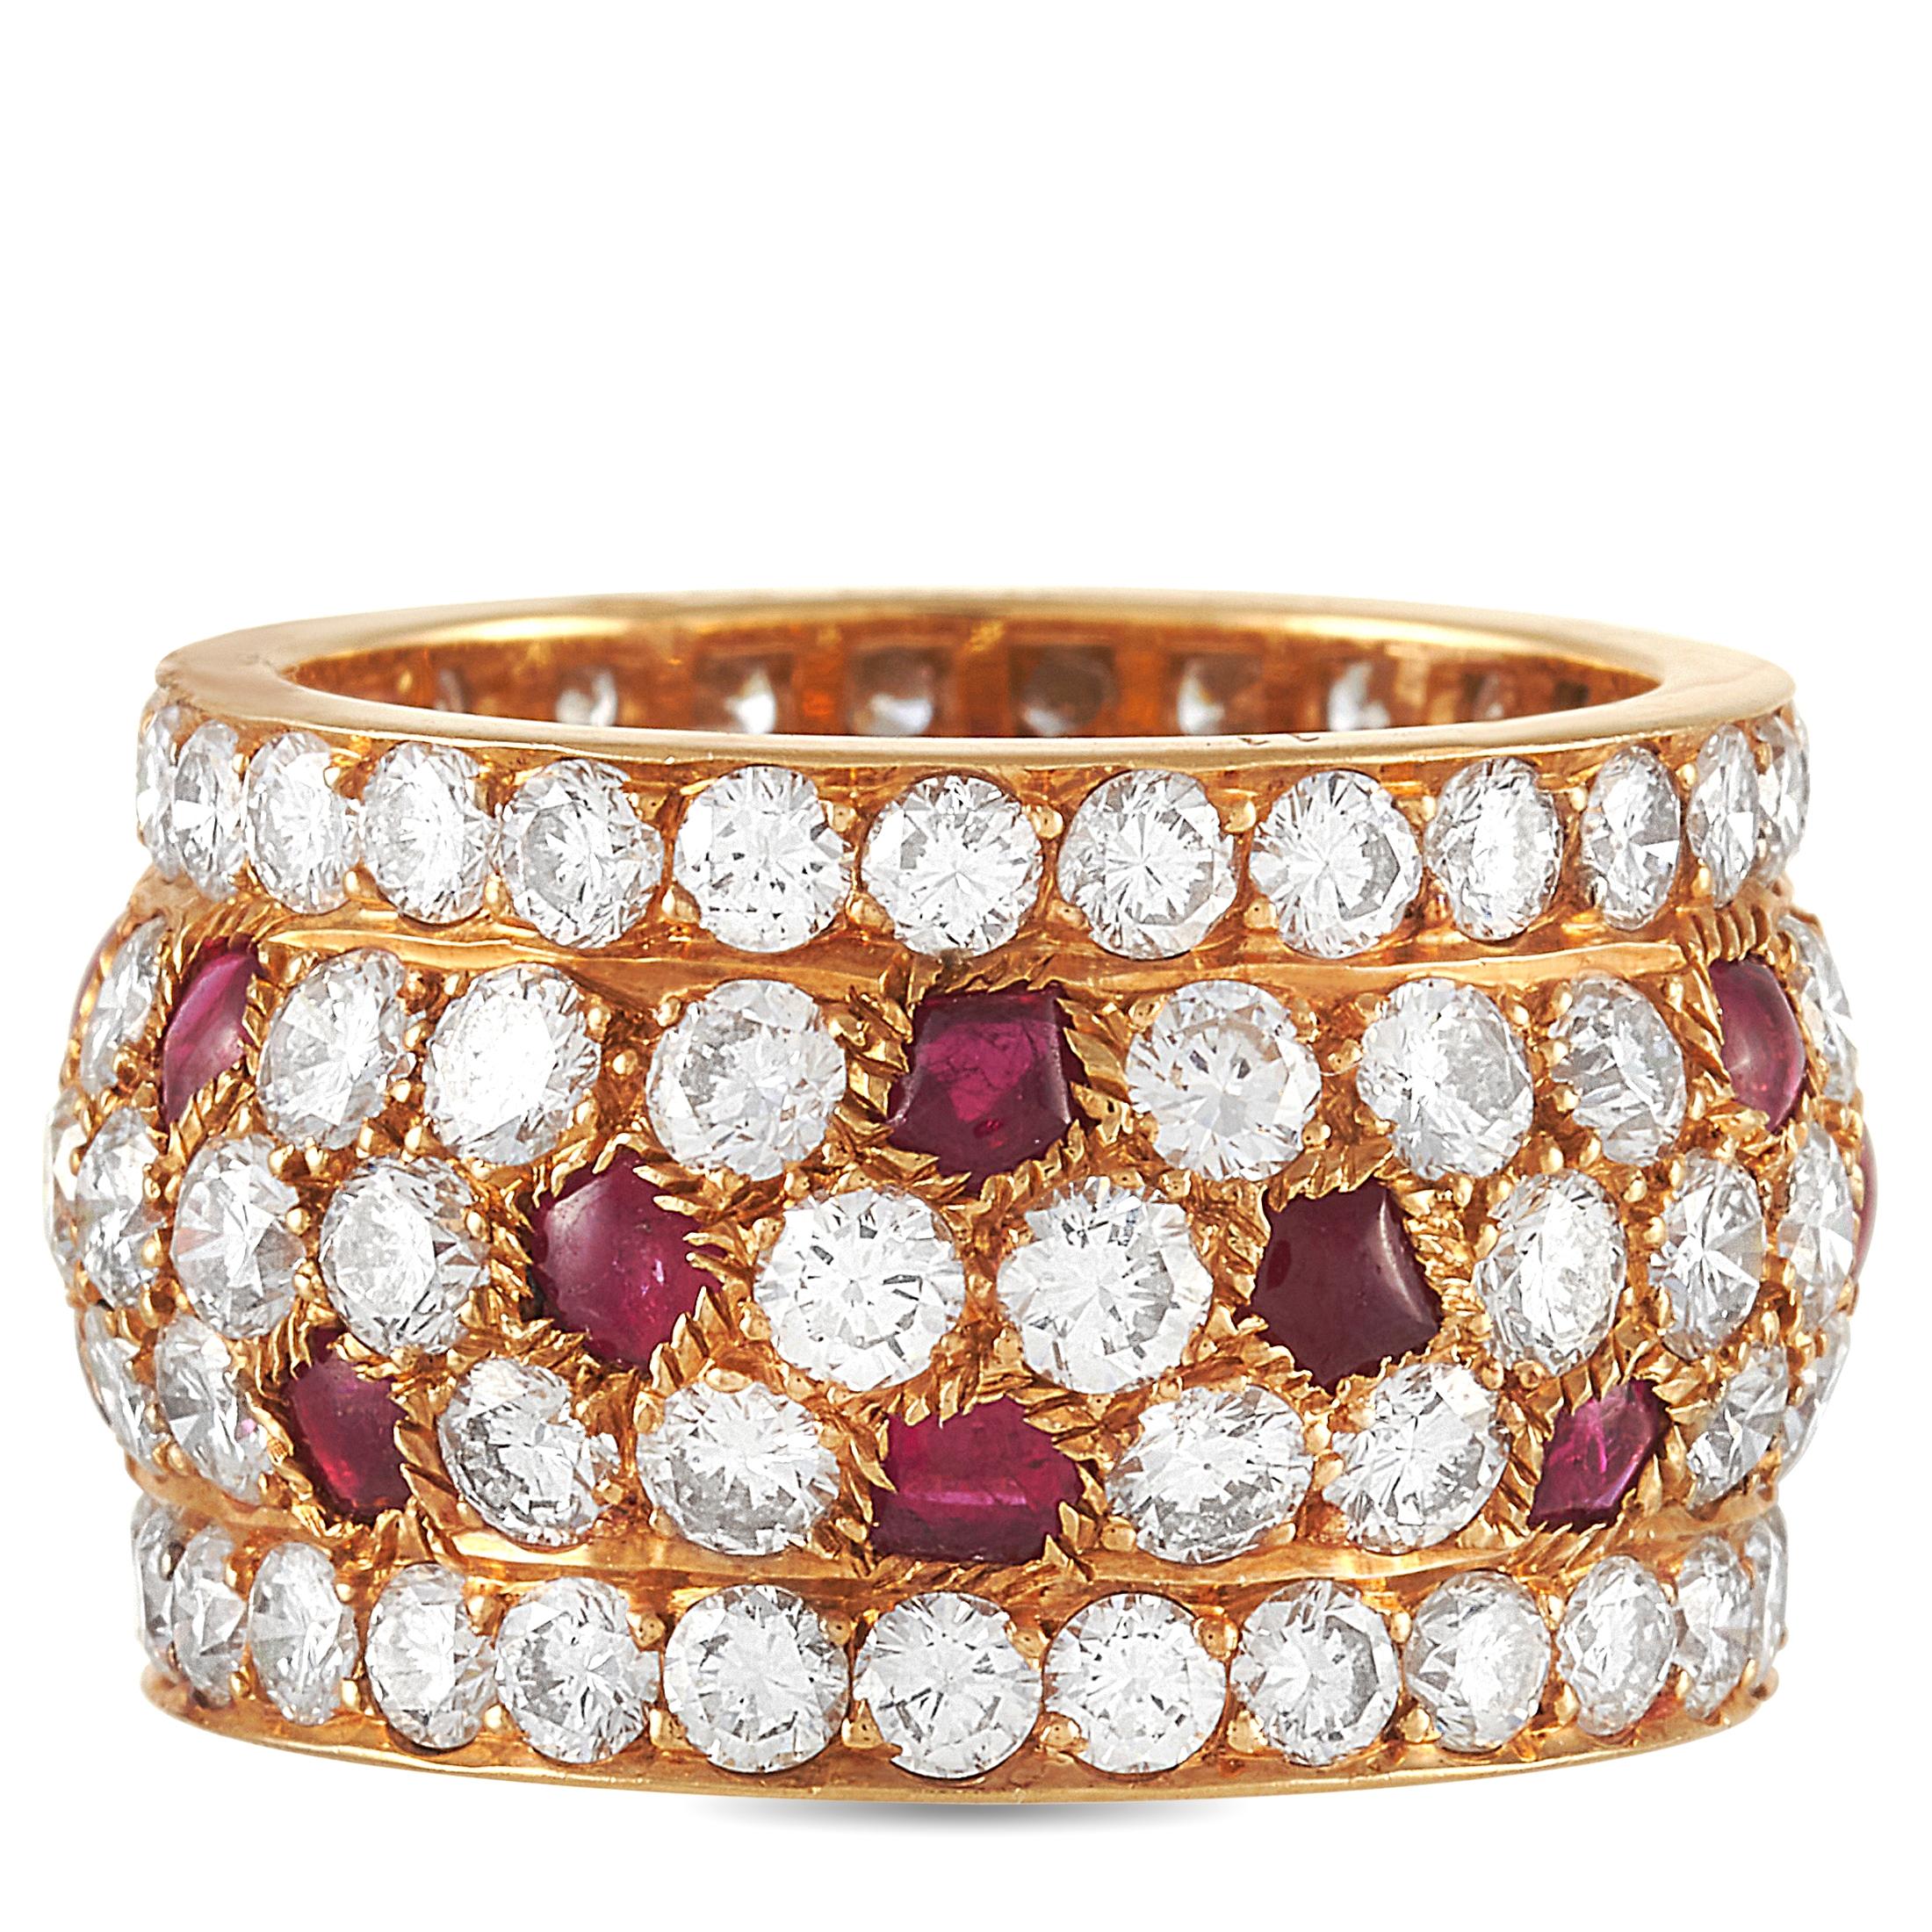 Women's Cartier Nigeria 18k Yellow Gold Diamond and Ruby Ring